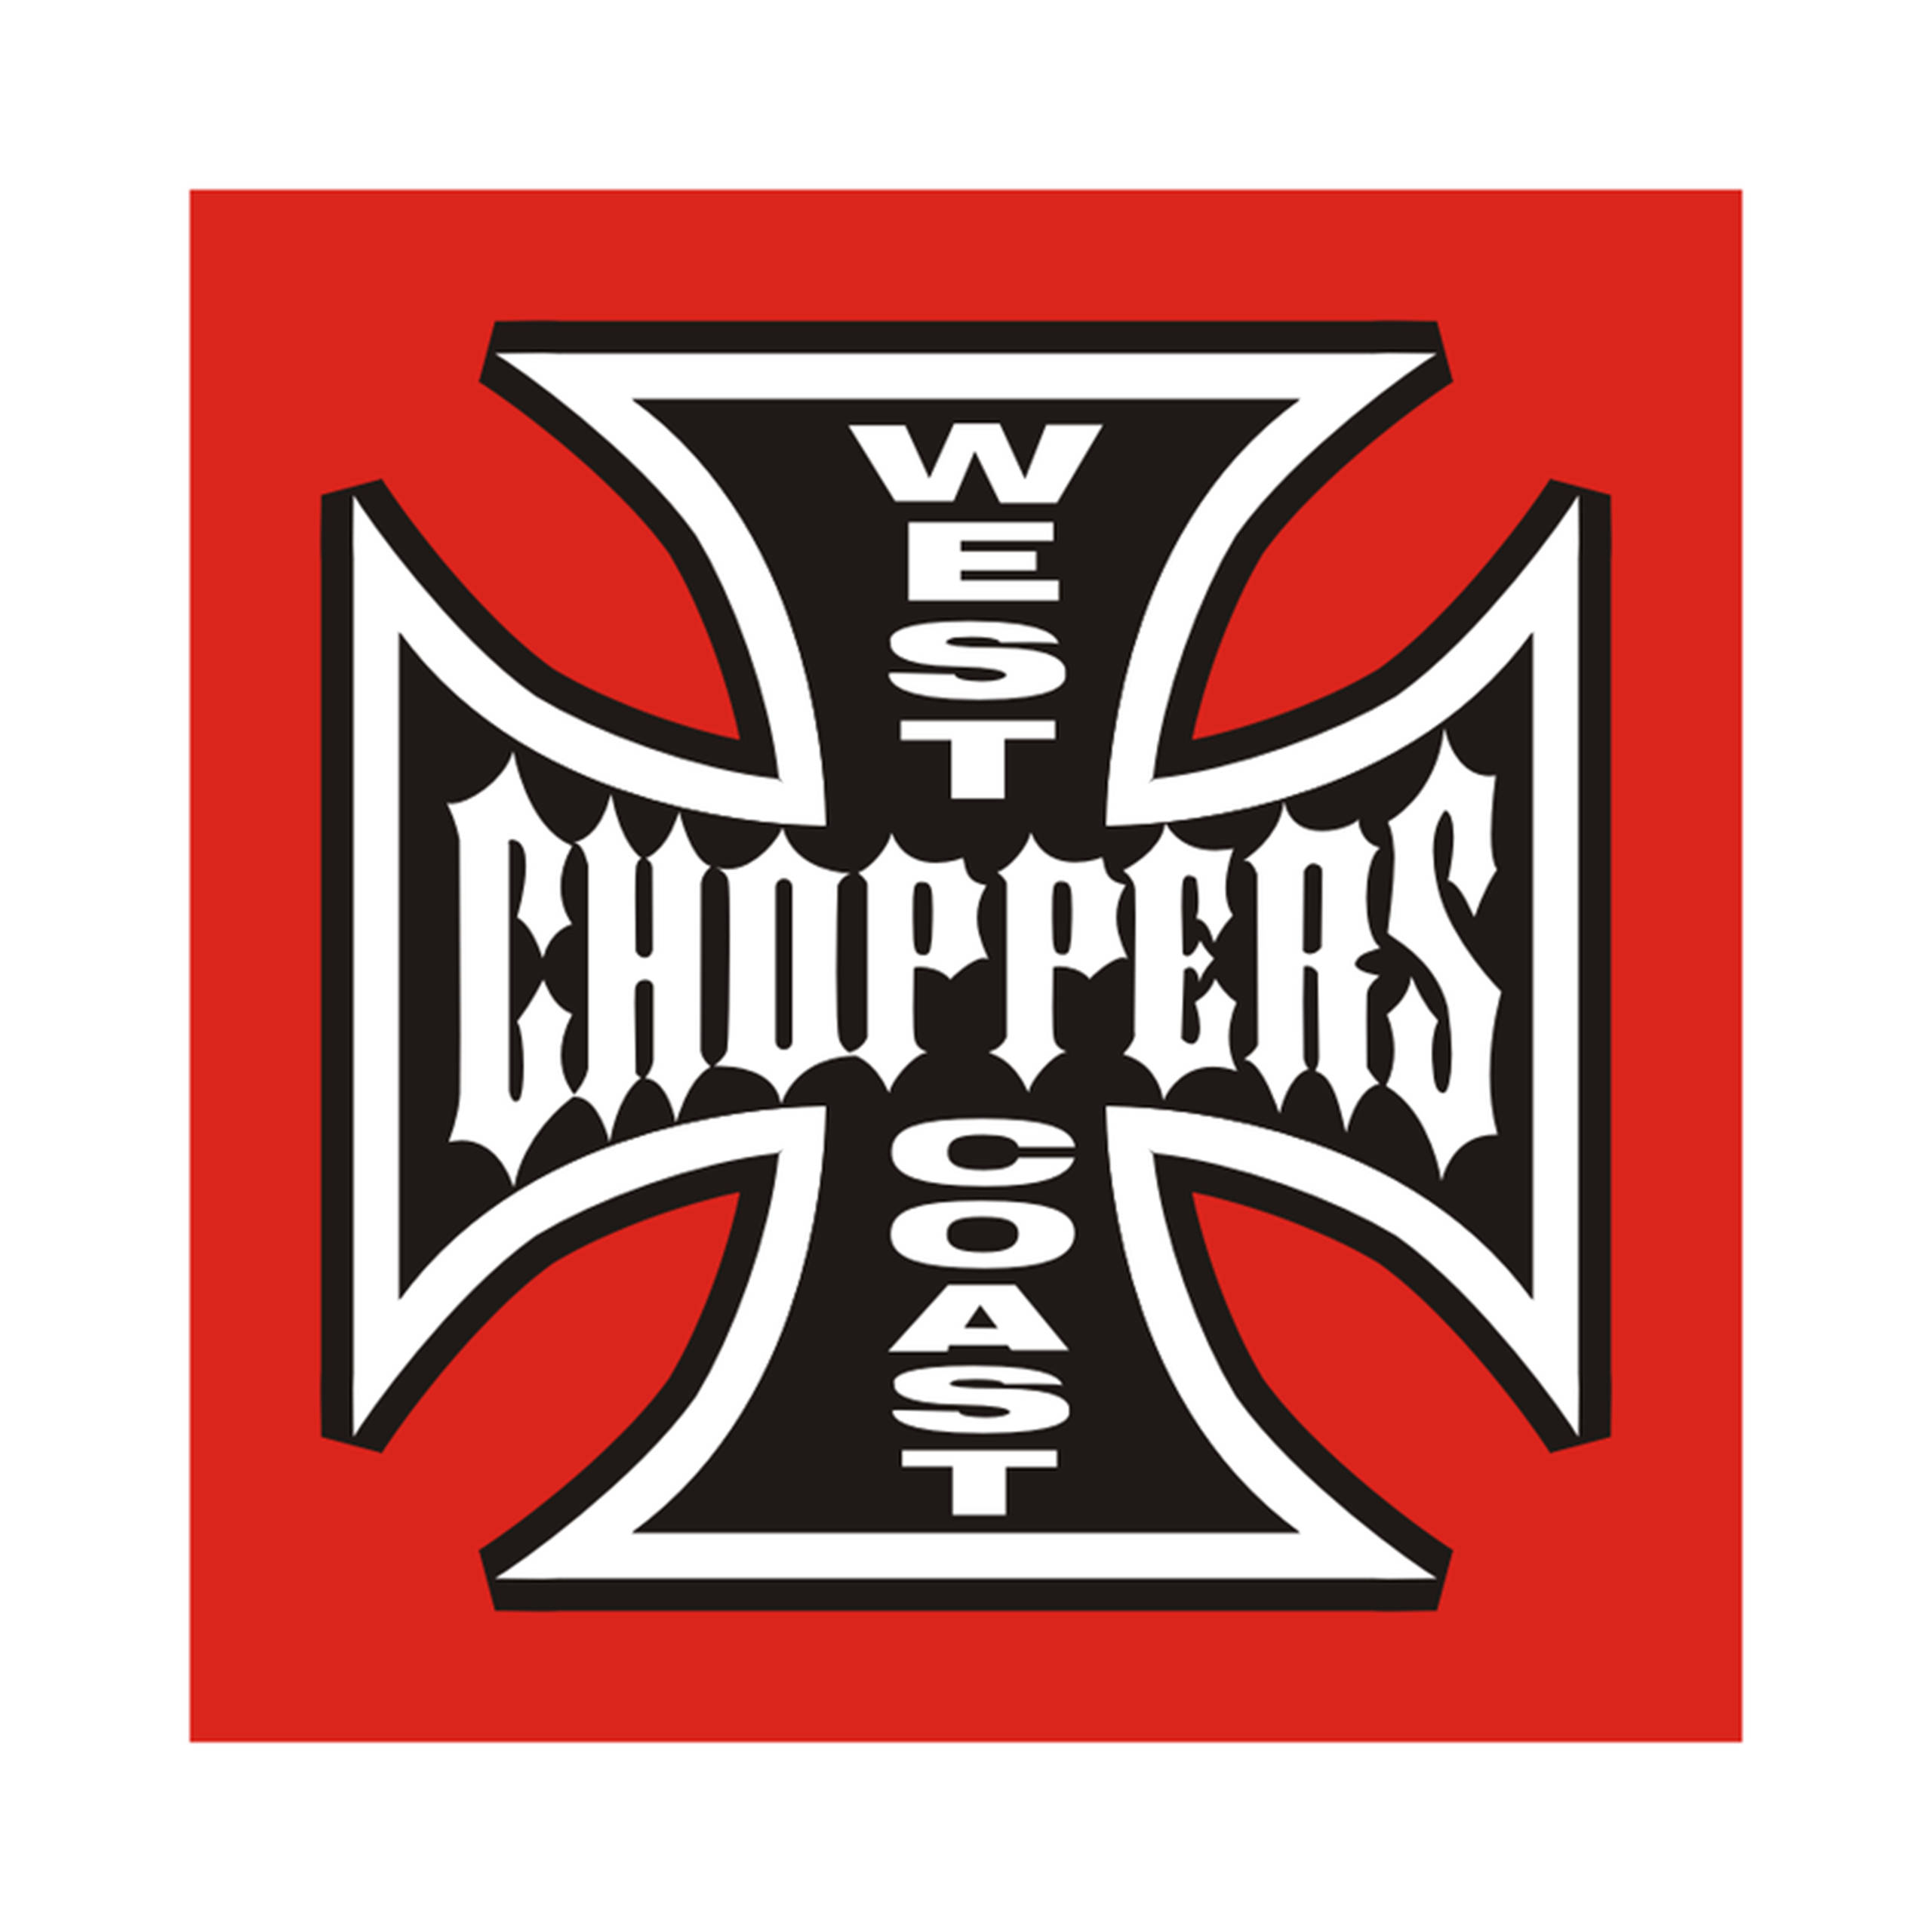 Sv: West Coast Choppers Emblem Tapet: Dette tapet har en ægte design af West Coast Choppers Emblem. Wallpaper